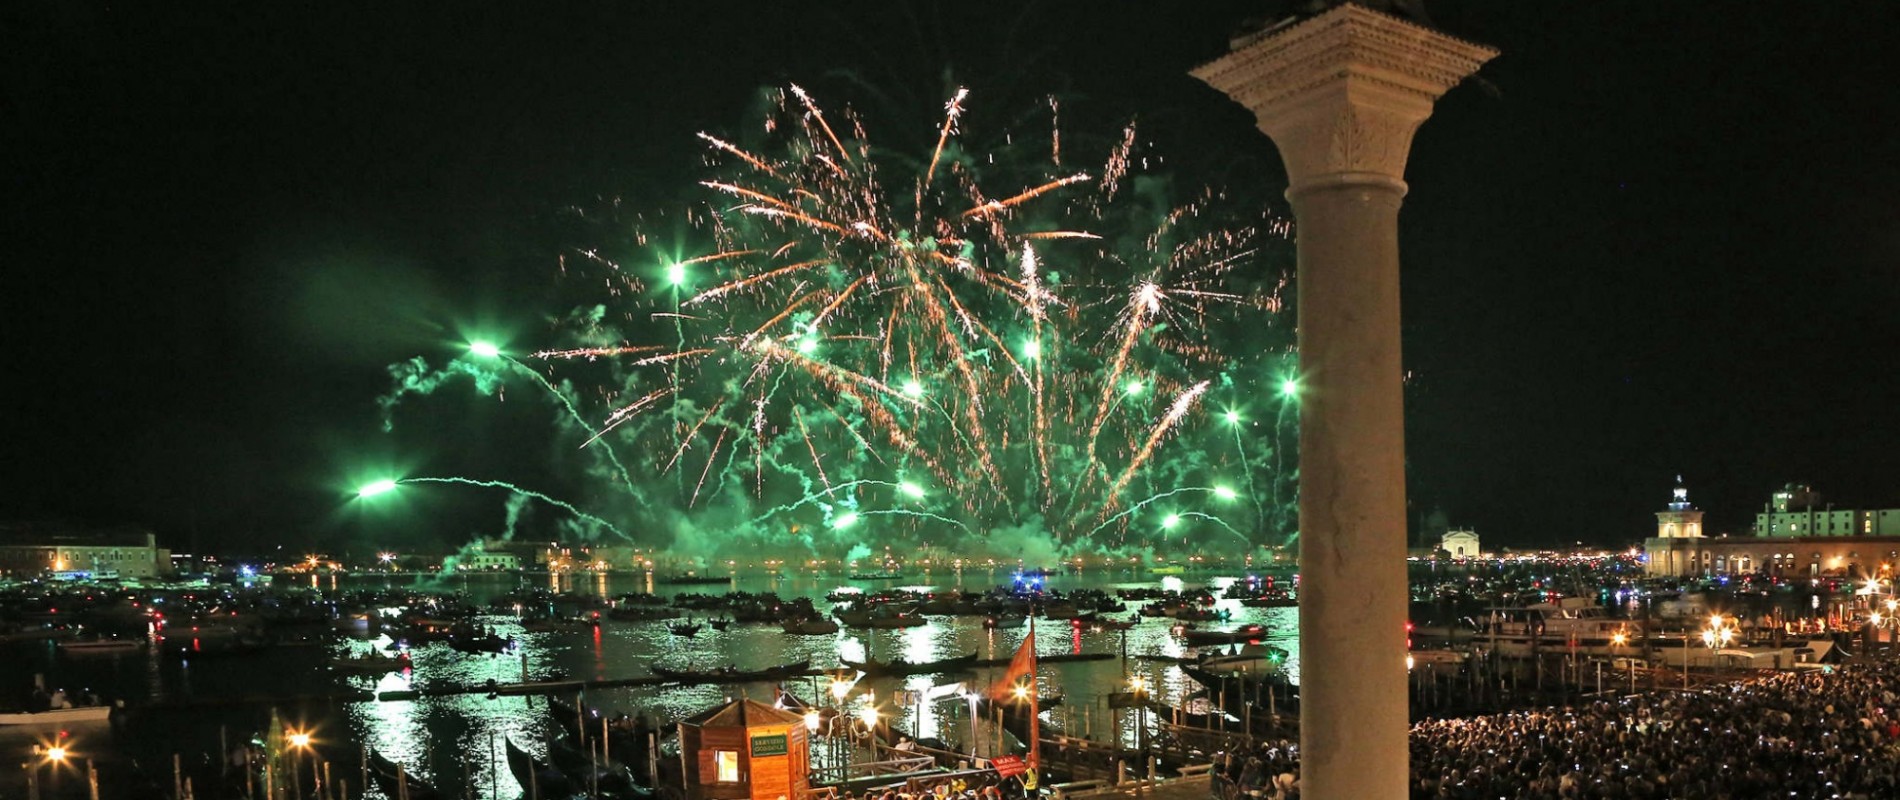 Venezia/Venice Fuochi del Redentore Fireworks during Rendentore